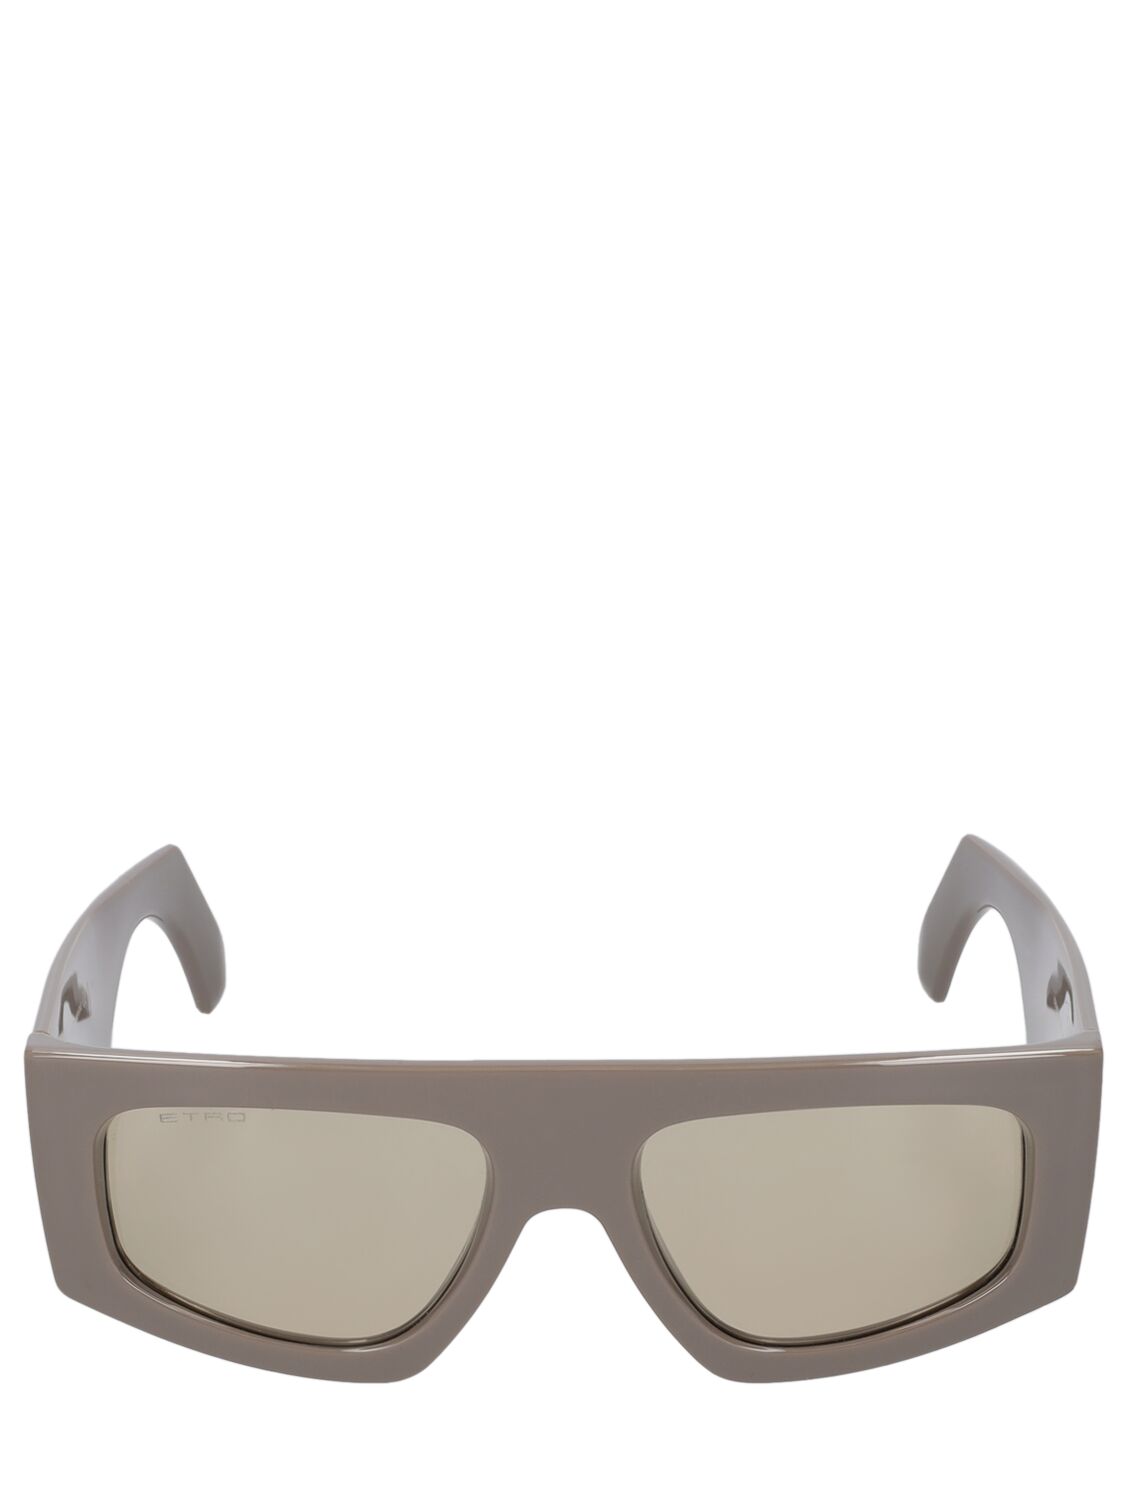 Etroscreen Squared Sunglasses